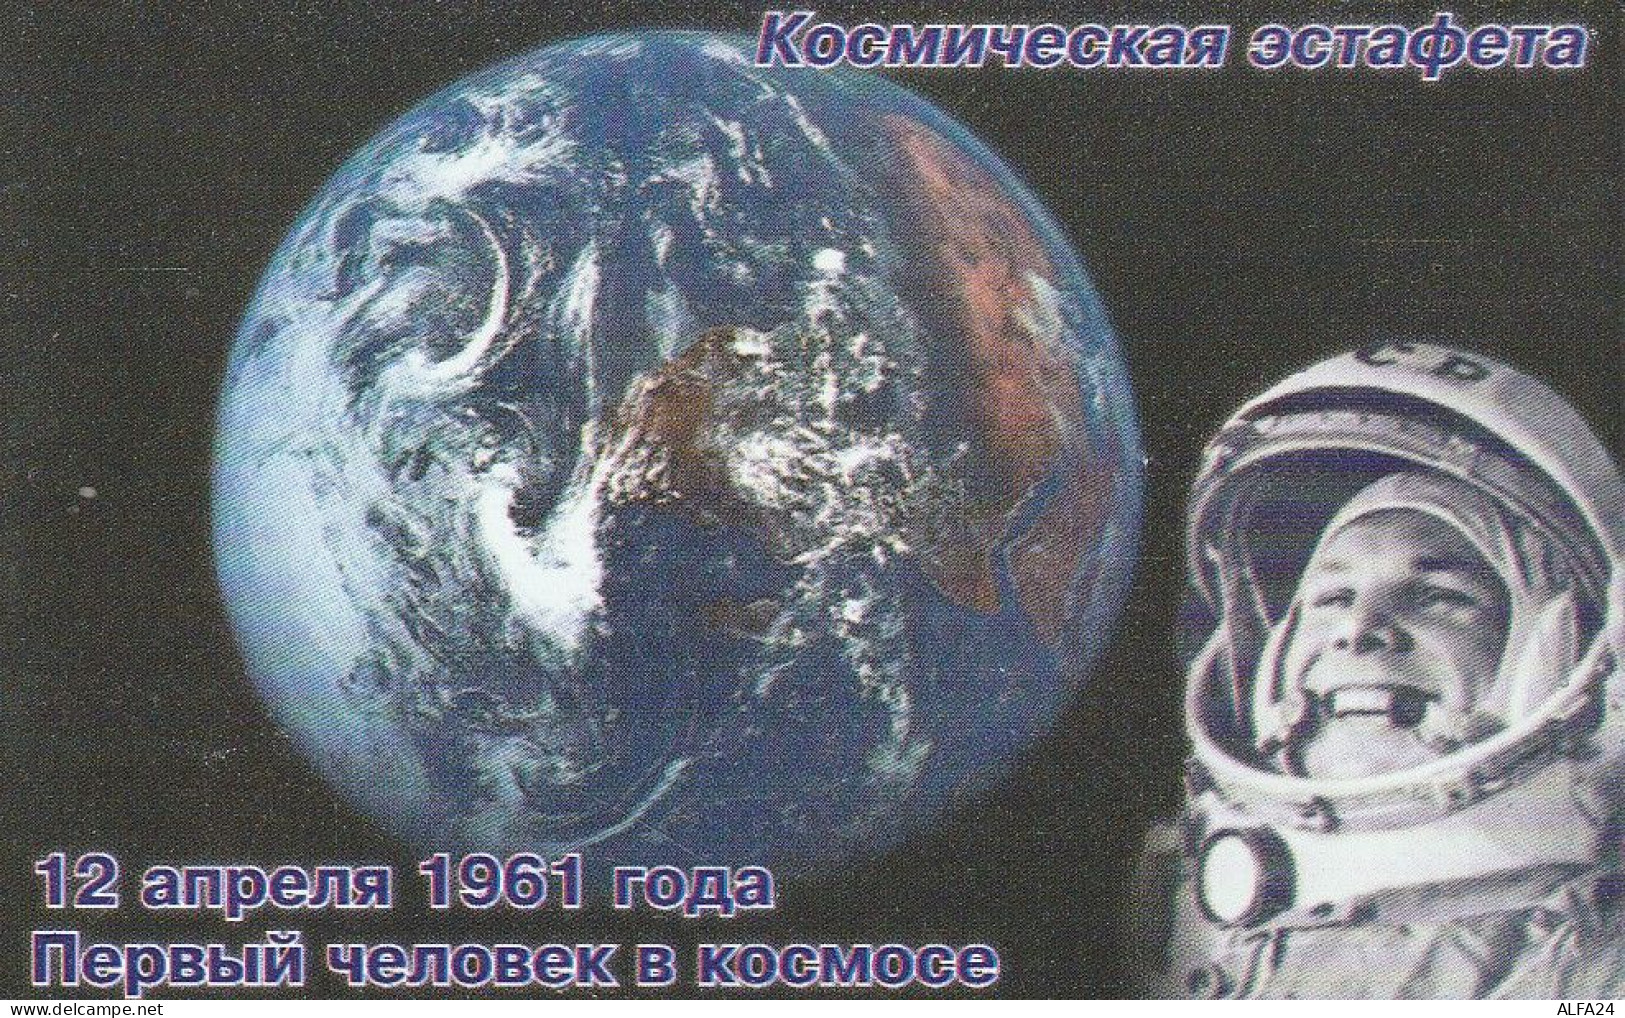 PHONE CARD RUSSIA Bashinformsvyaz - Ufa (E9.3.1 - Rusia